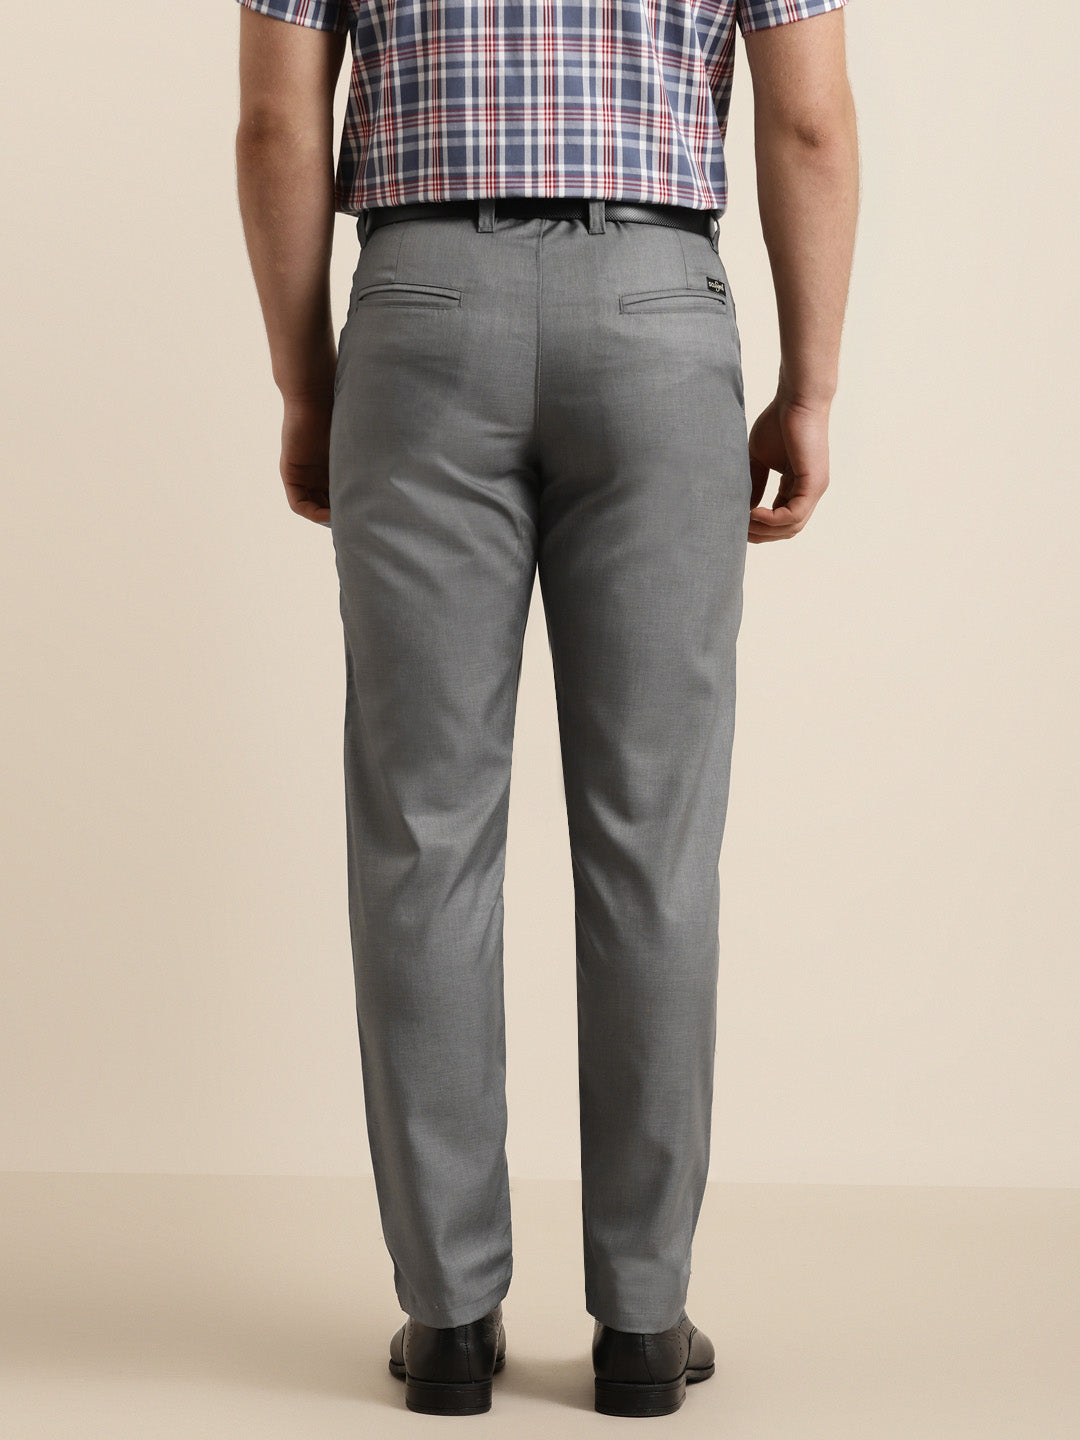 Men's Cotton Blend Charcoal grey Solid Casual Trouser - Sojanya